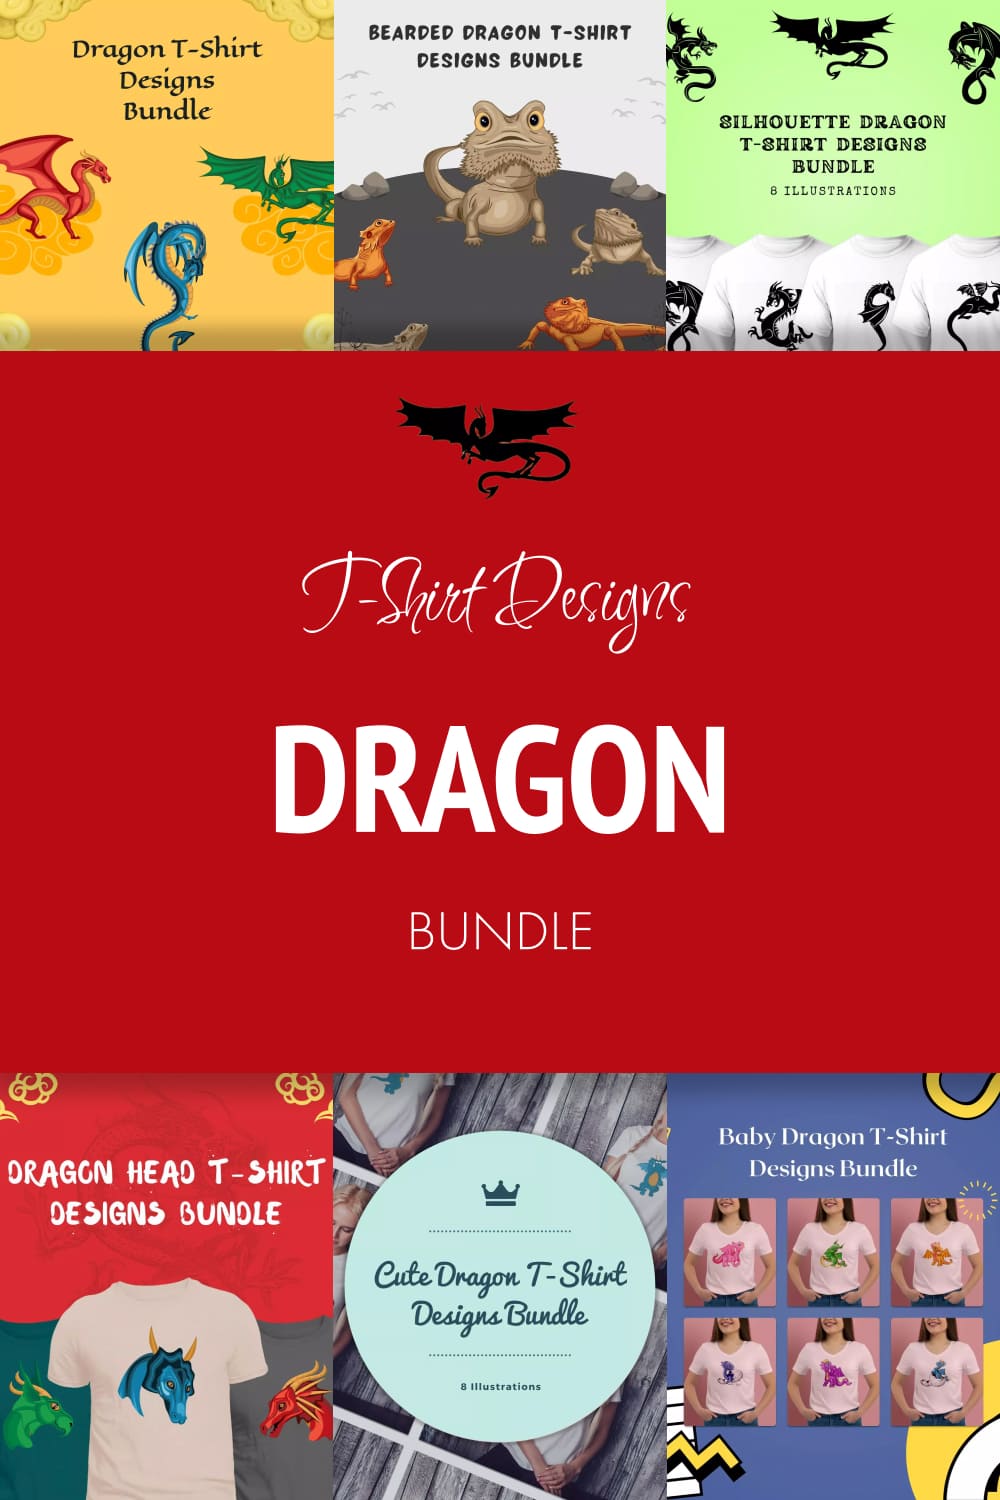 Dragon T-shirt Designs Bundle - Pinterest.